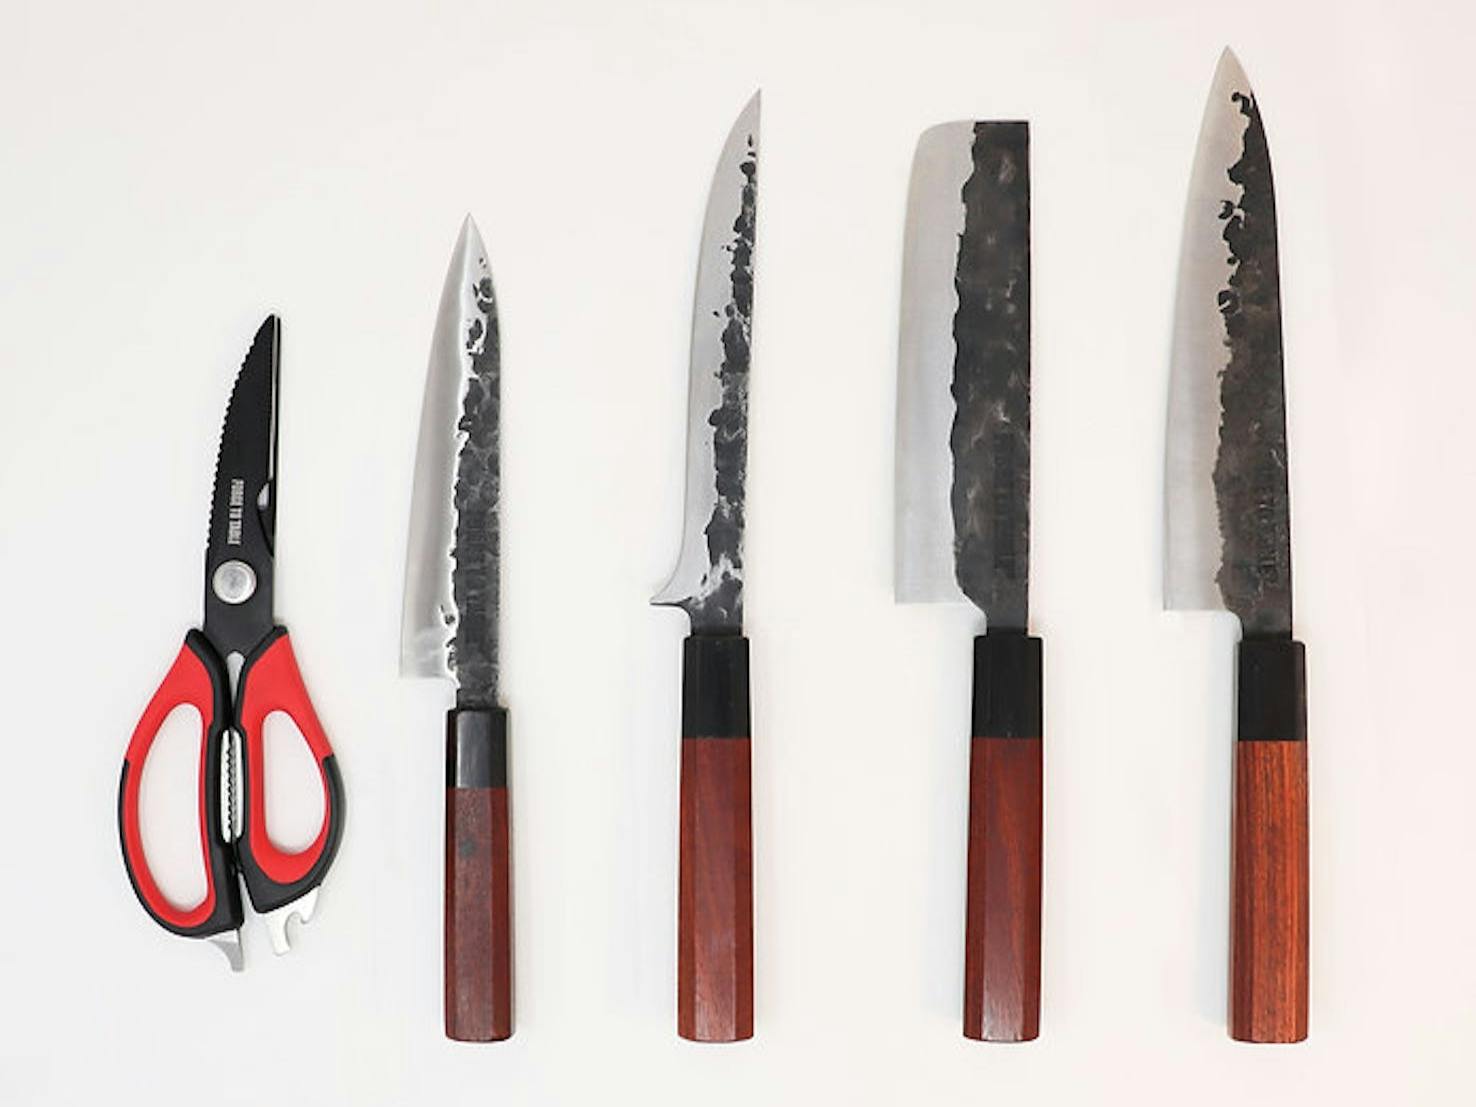 Save 30% on Schmidt Brothers Carbon Kitchen Knives